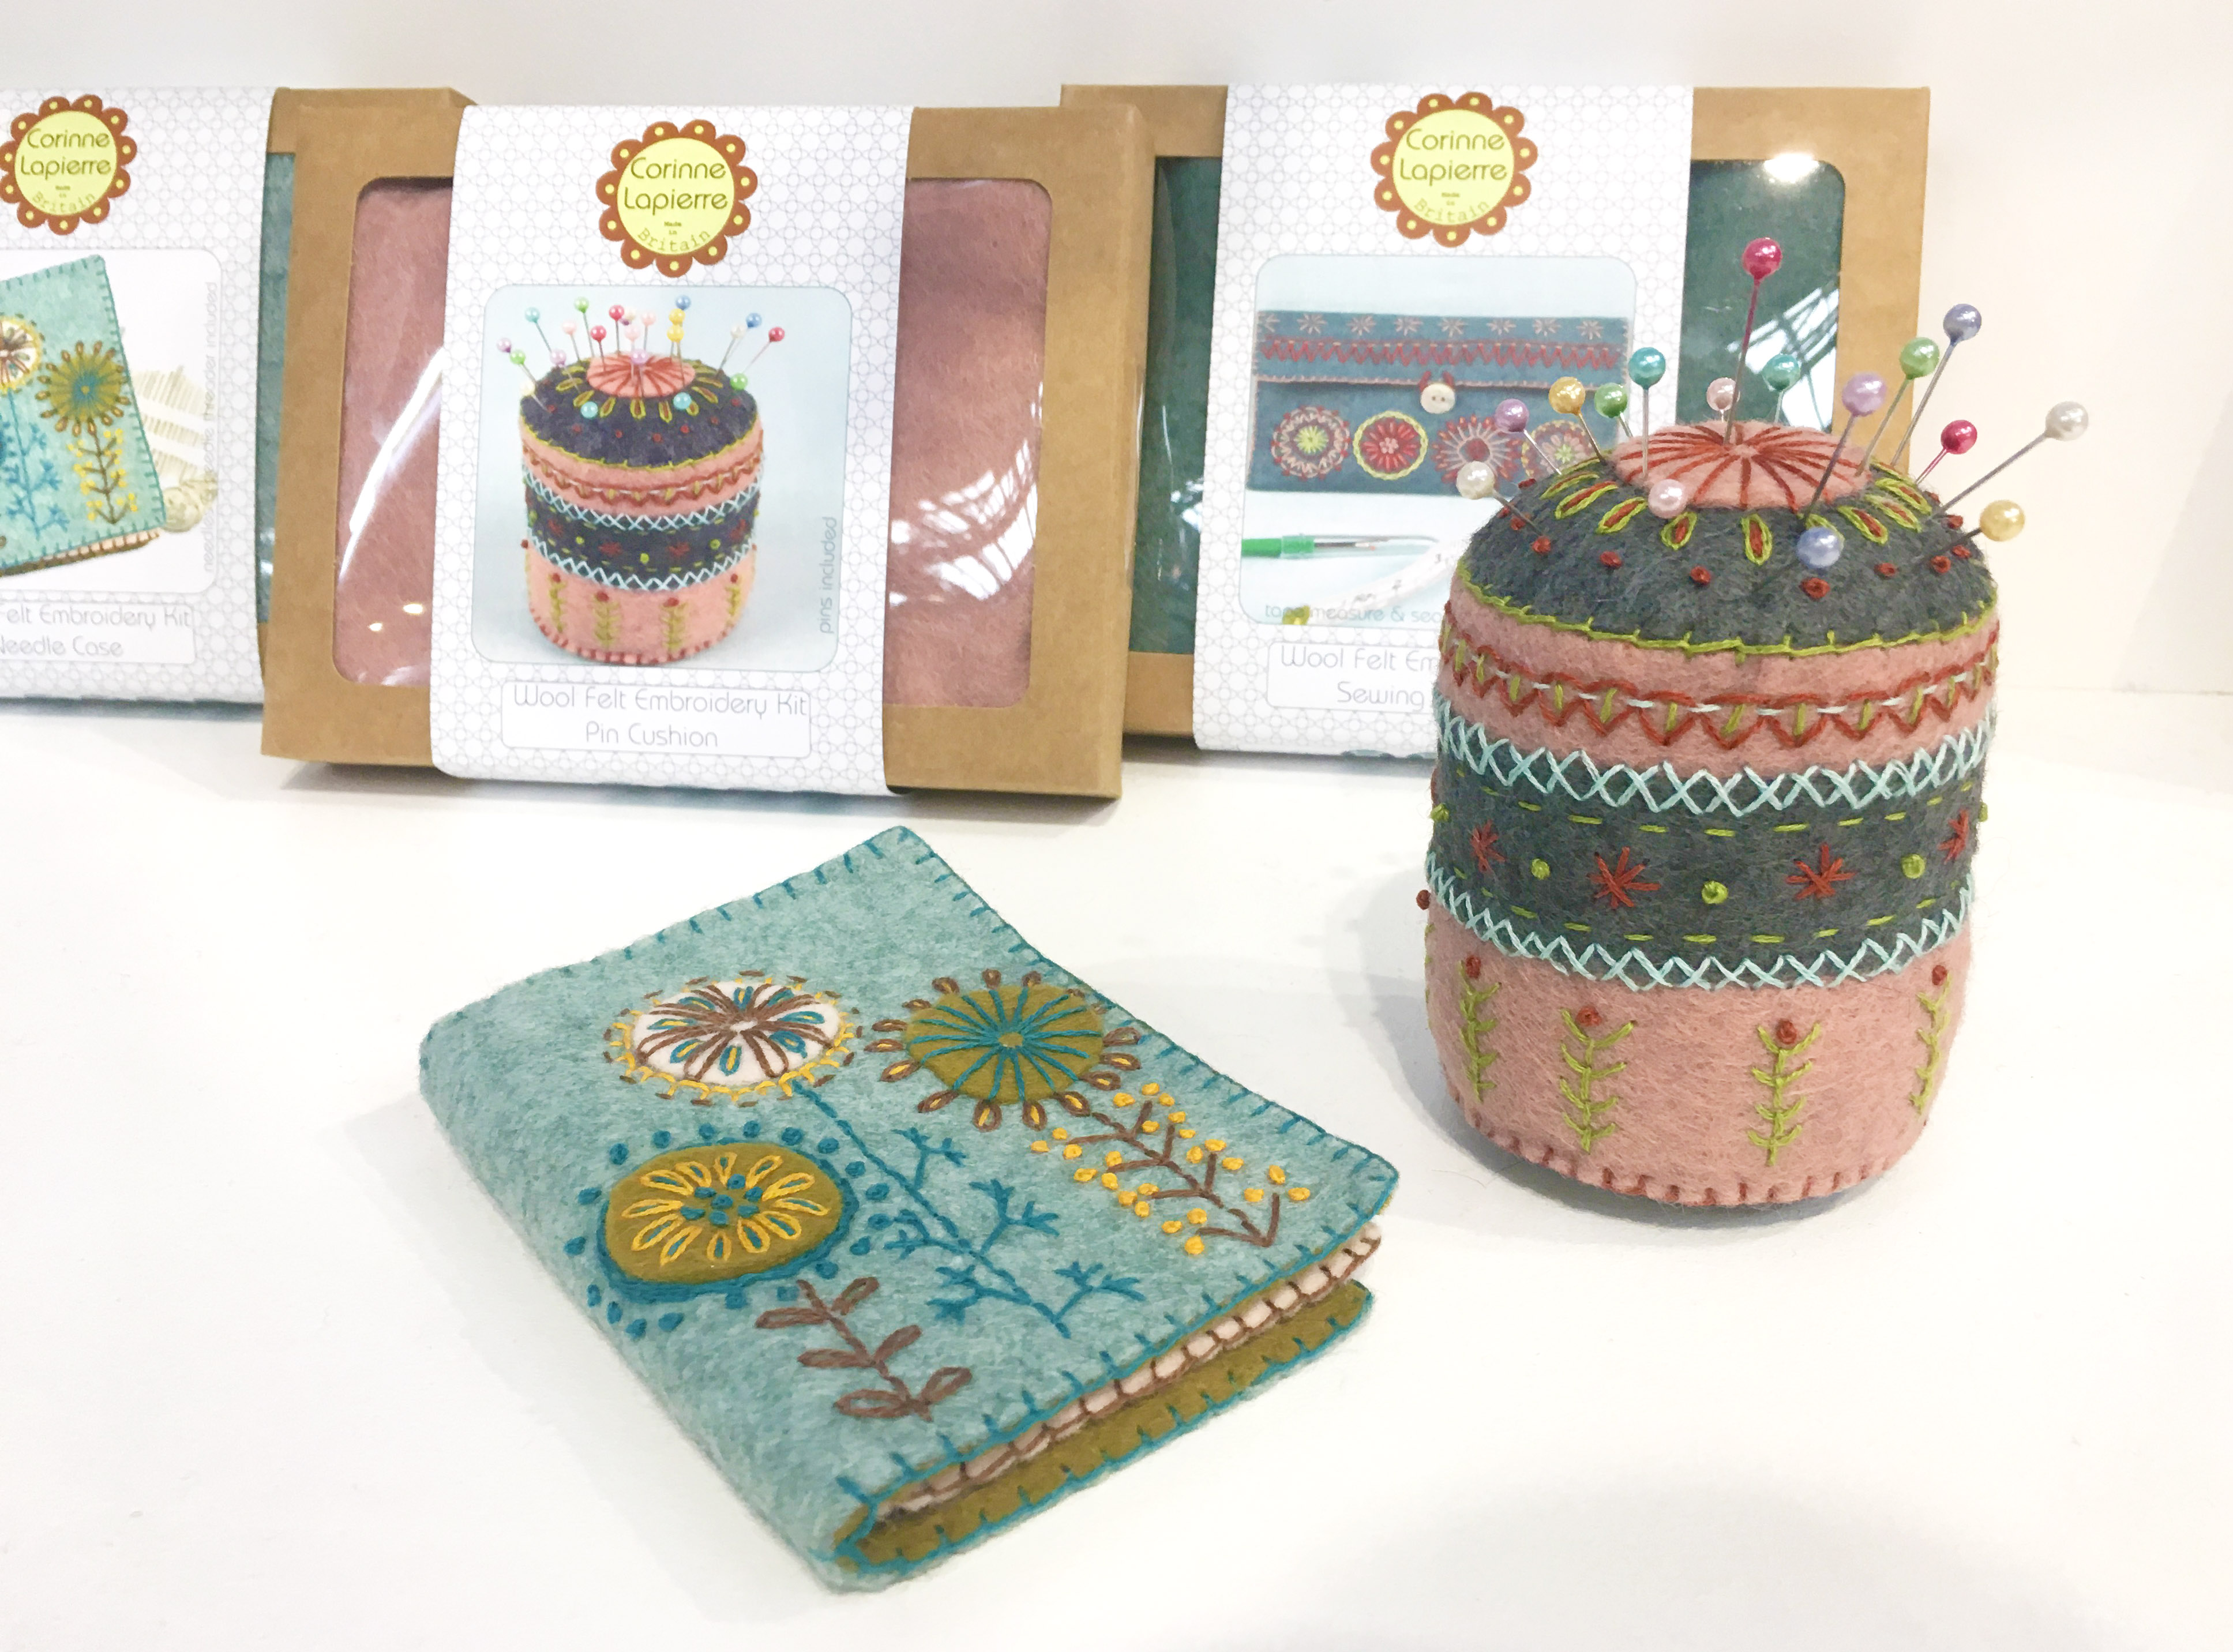 Corinne lapierre Wool felt embroidery kits